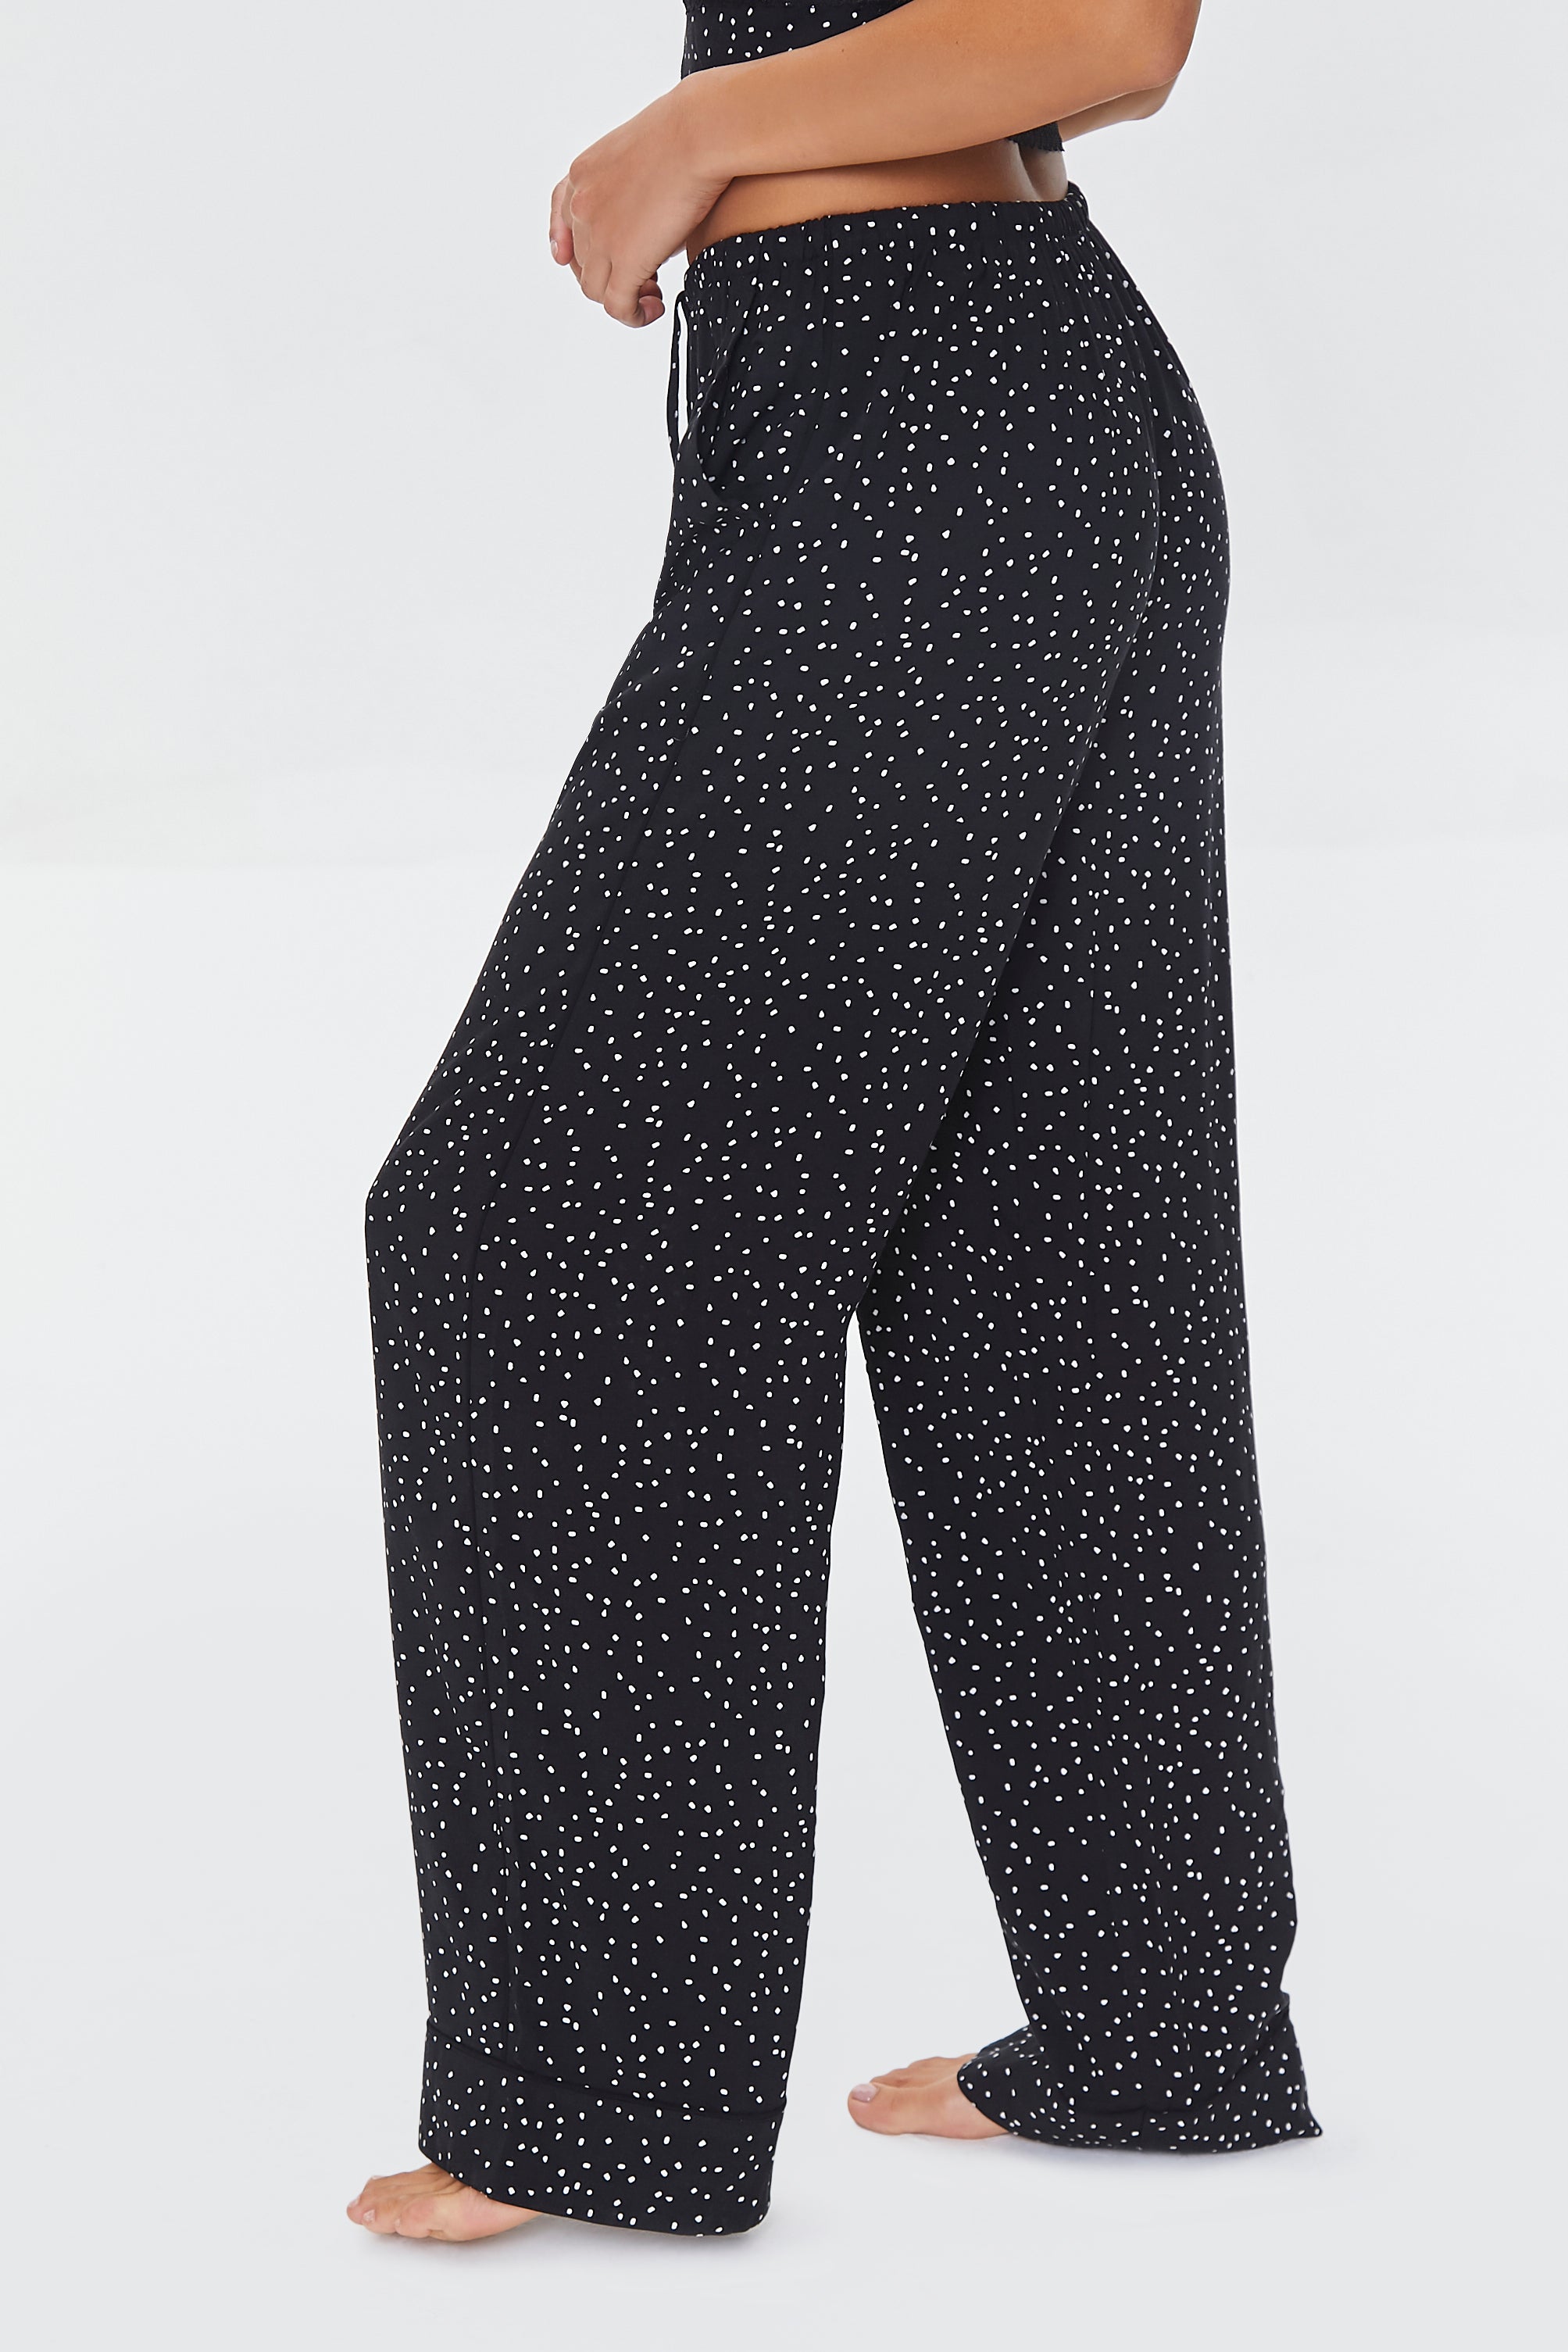 Blackwhite Speckled Drawstring Pajama Pants 2